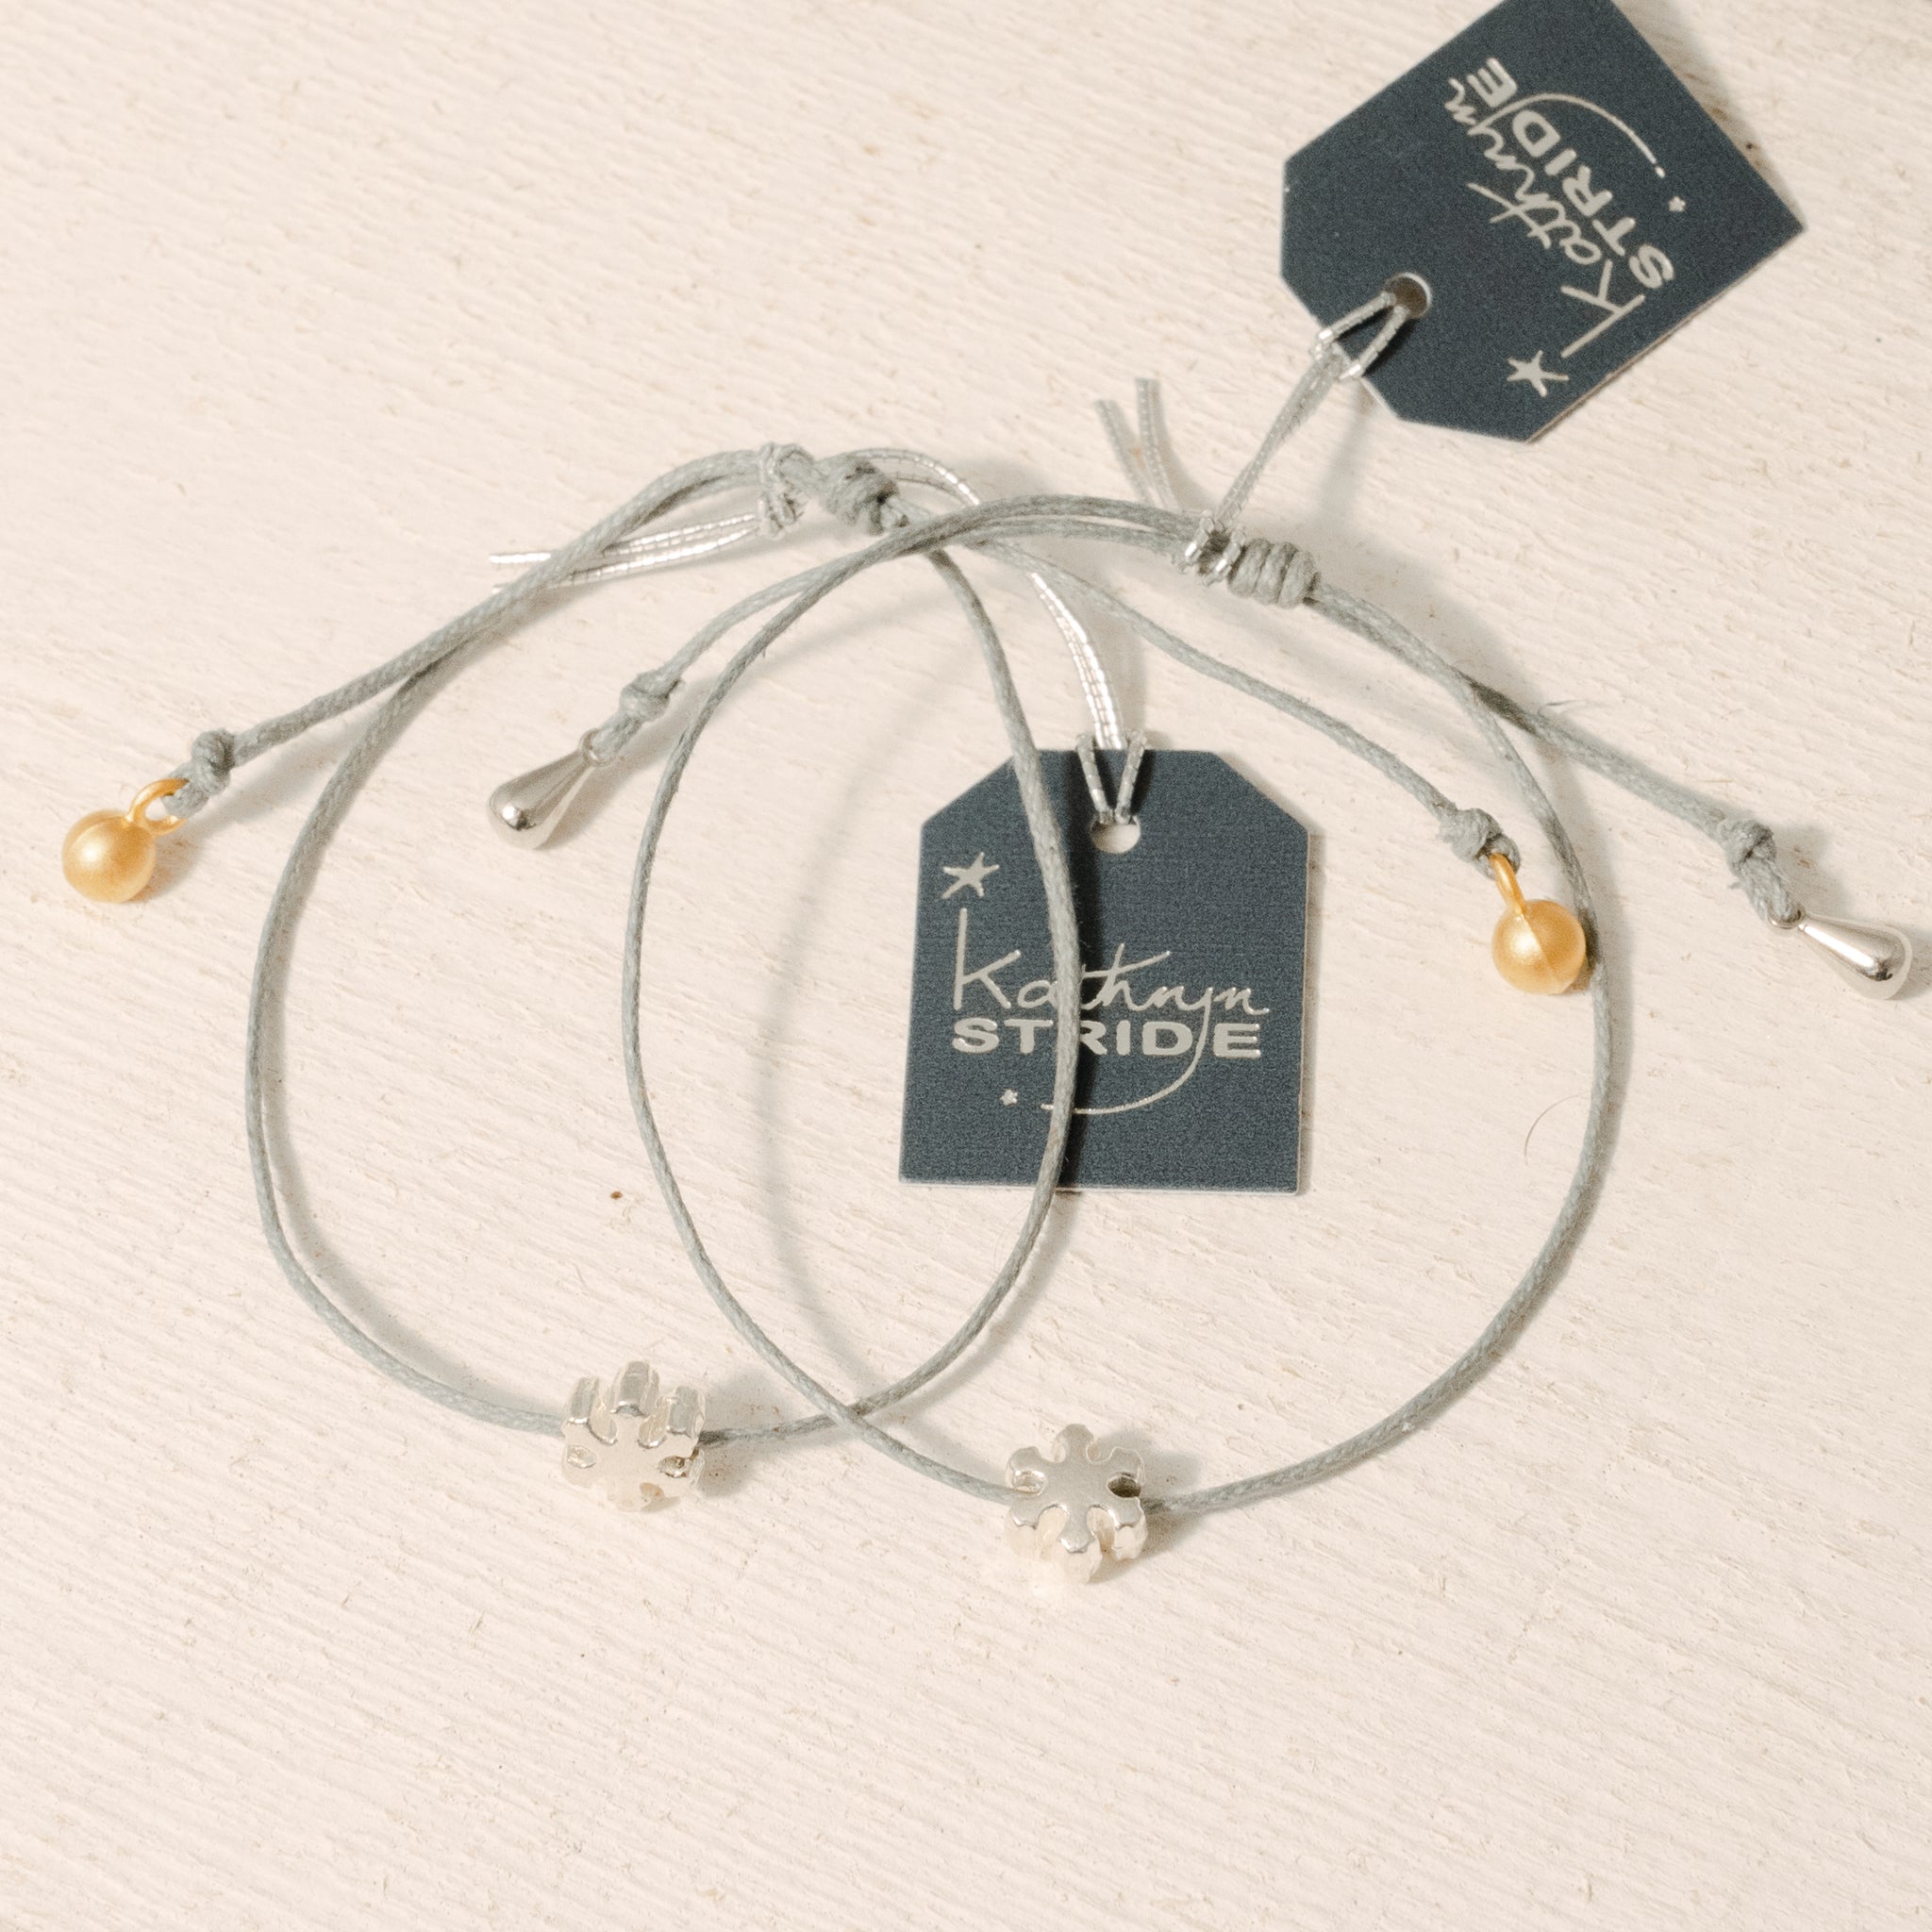 Grey cord Bracelet with Silver Snowflake metal charm